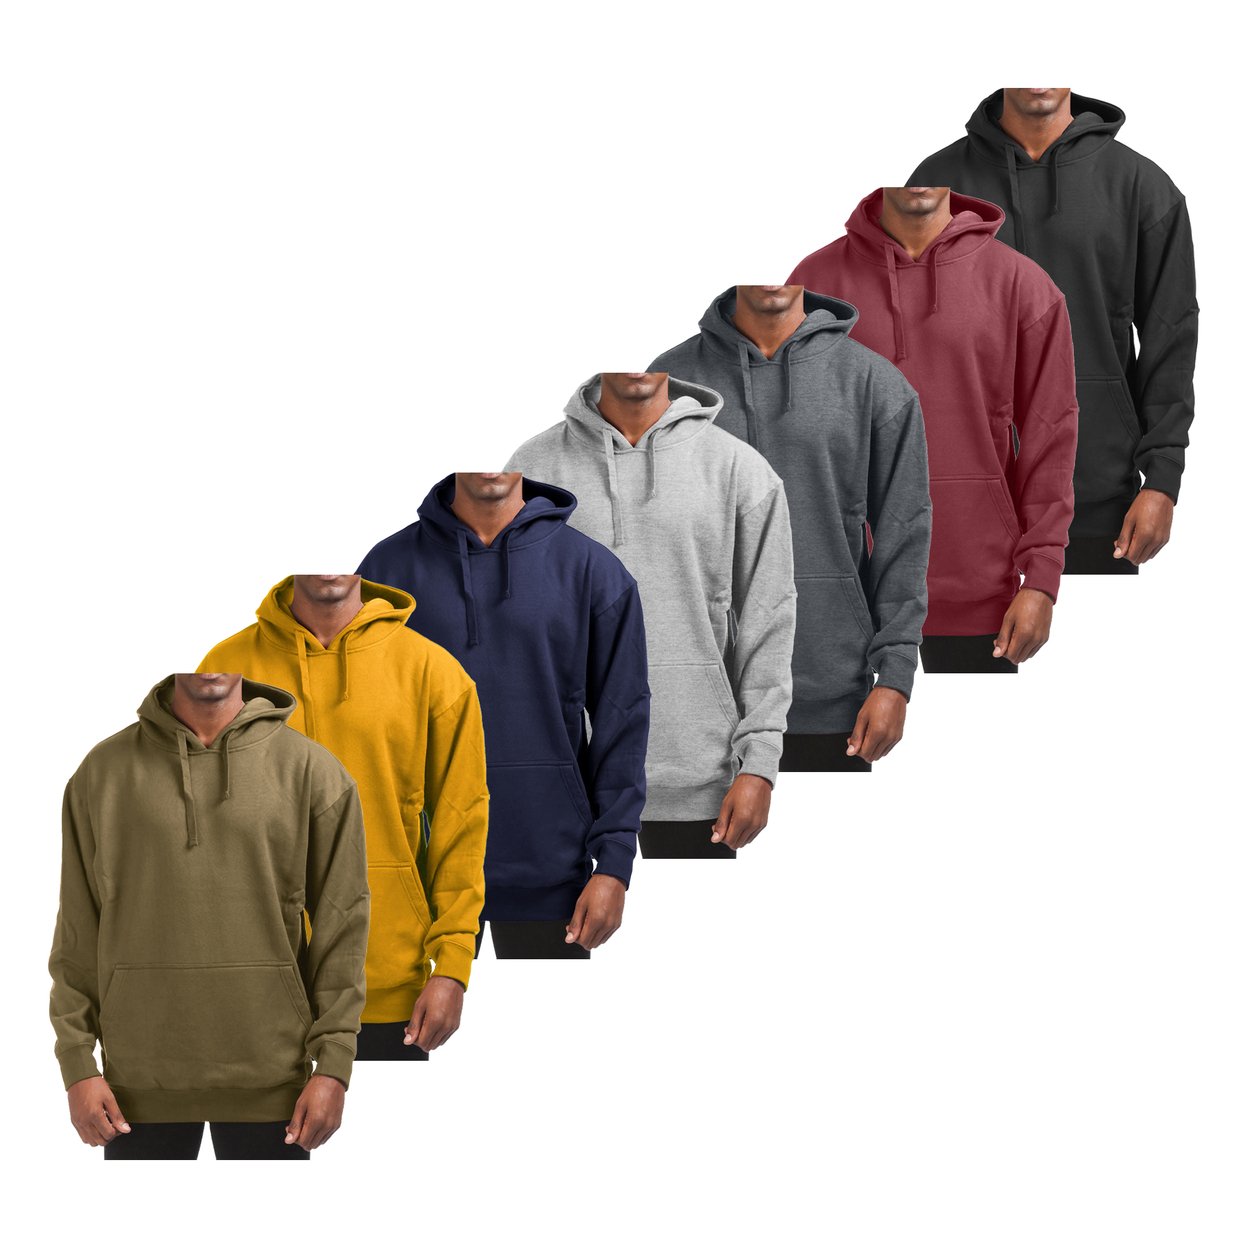 2-Pack: Men's Super-Soft Winter Warm Cotton-Blend Fleece Pullover Hoodie With Kangaroo Pocket - Black & Red, X-large